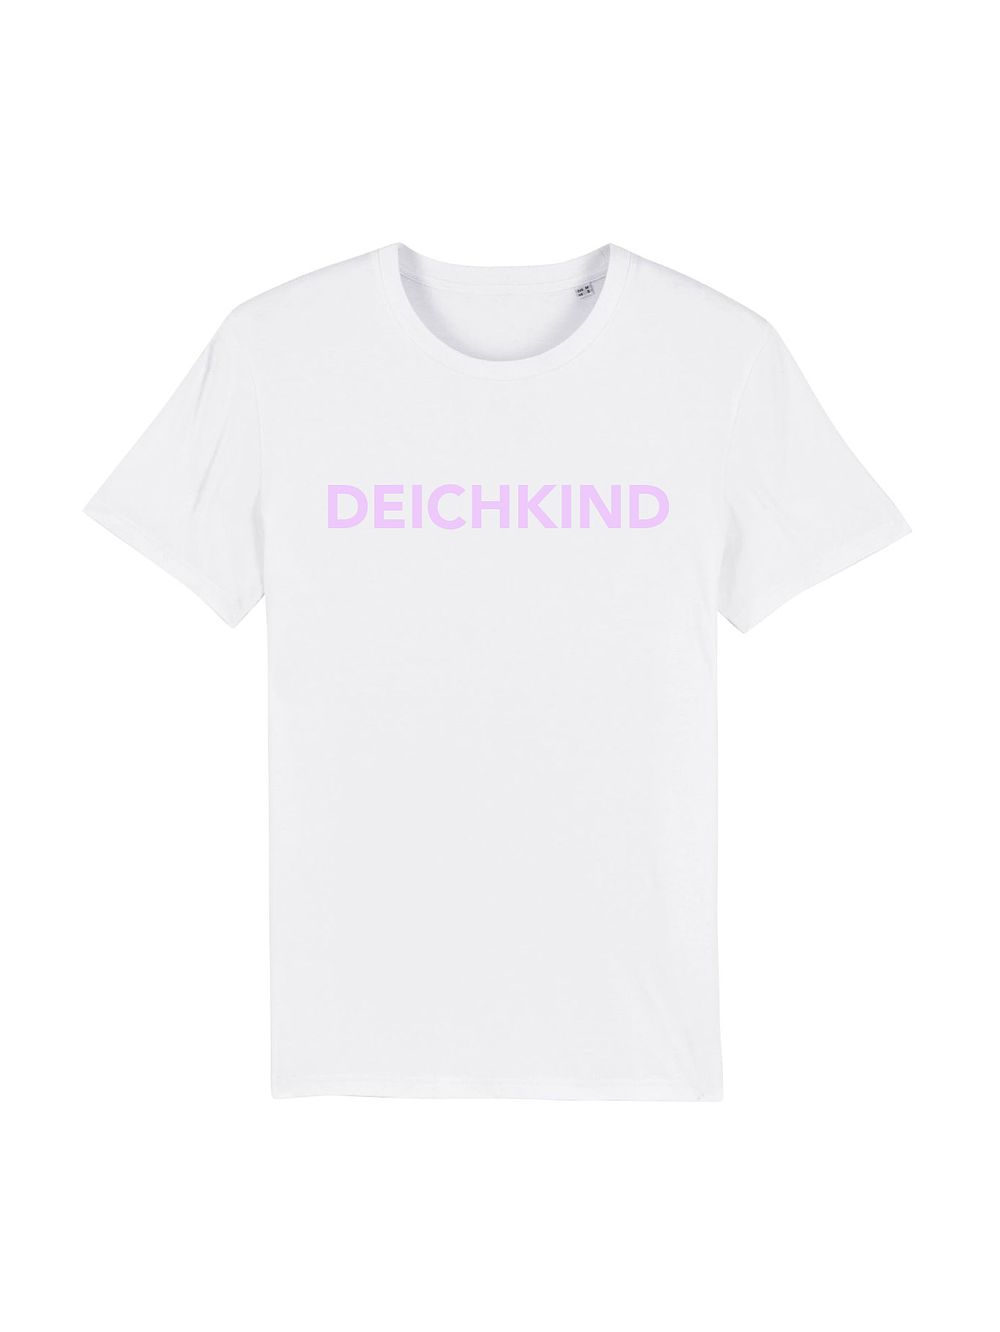 DEICHKIND - T-Shirt - Weiß/Rosa Schriftzug 